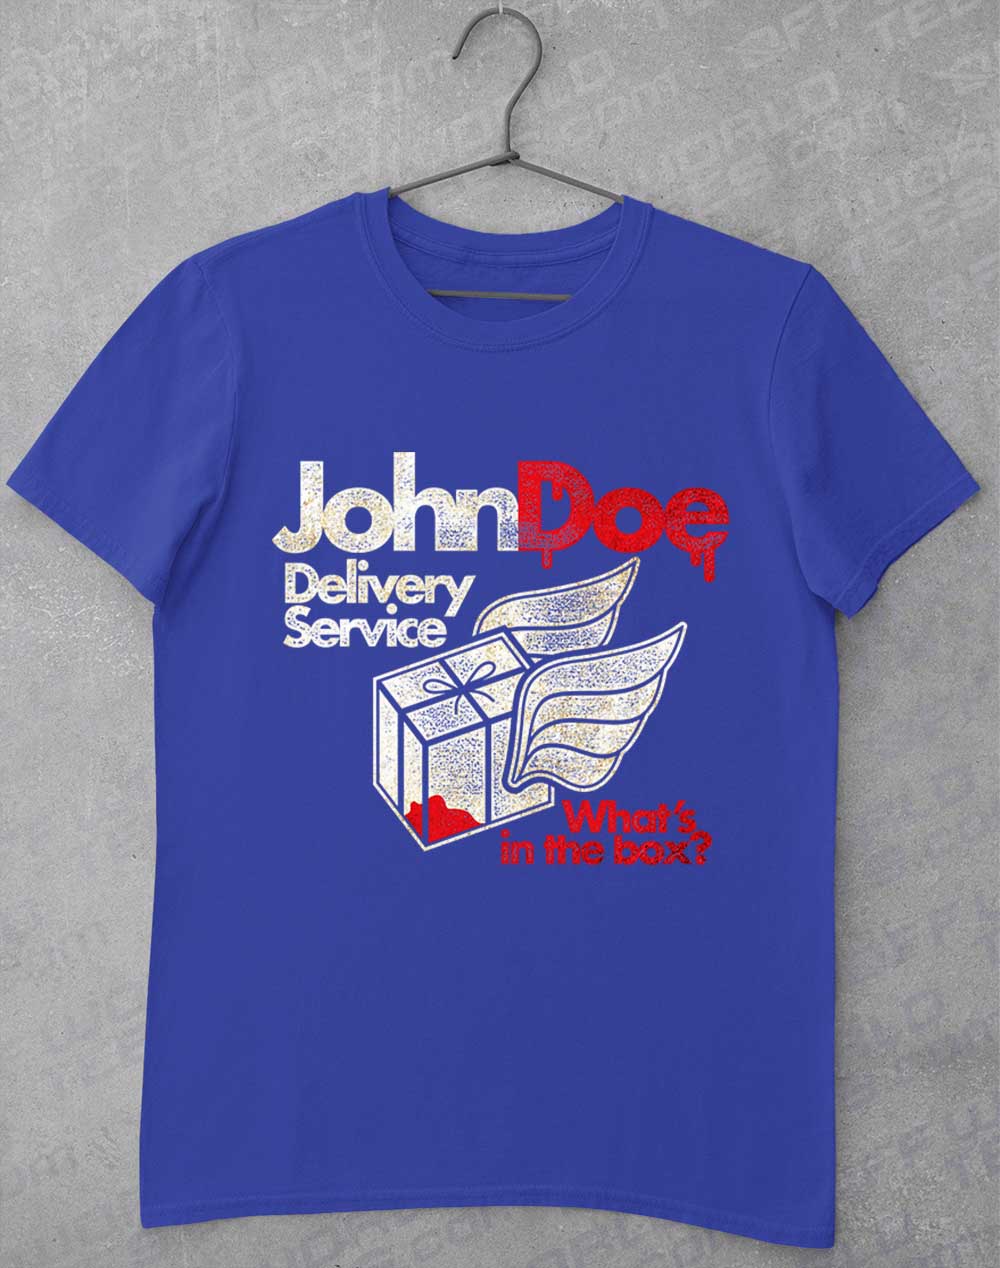 Royal - John Doe Delivery Service T-Shirt